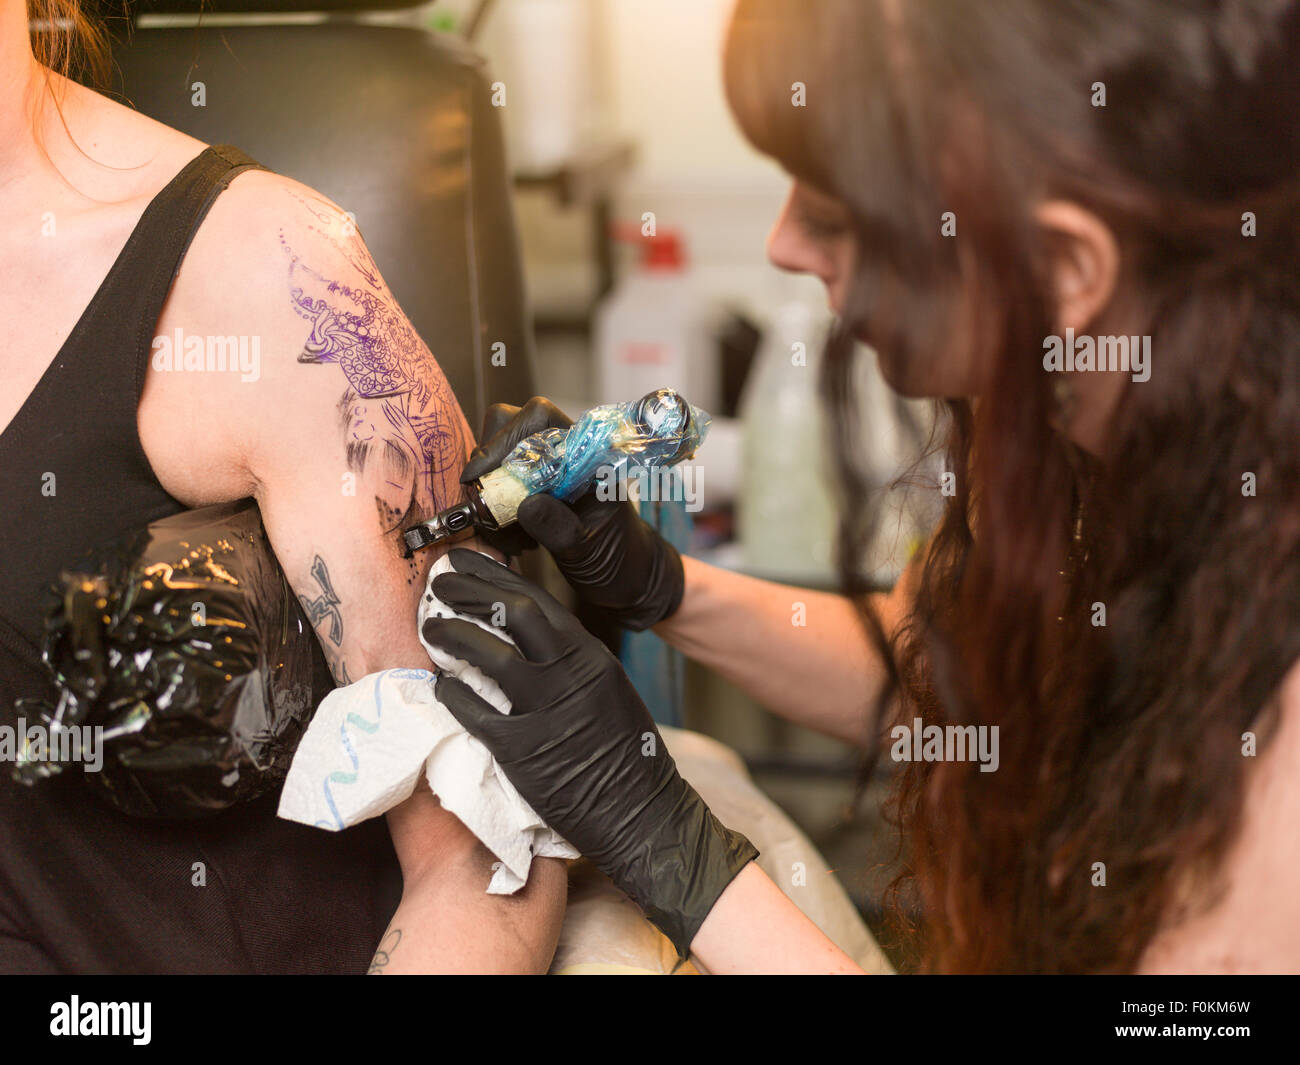 Tattoo artist at work Stock Photo - Alamy